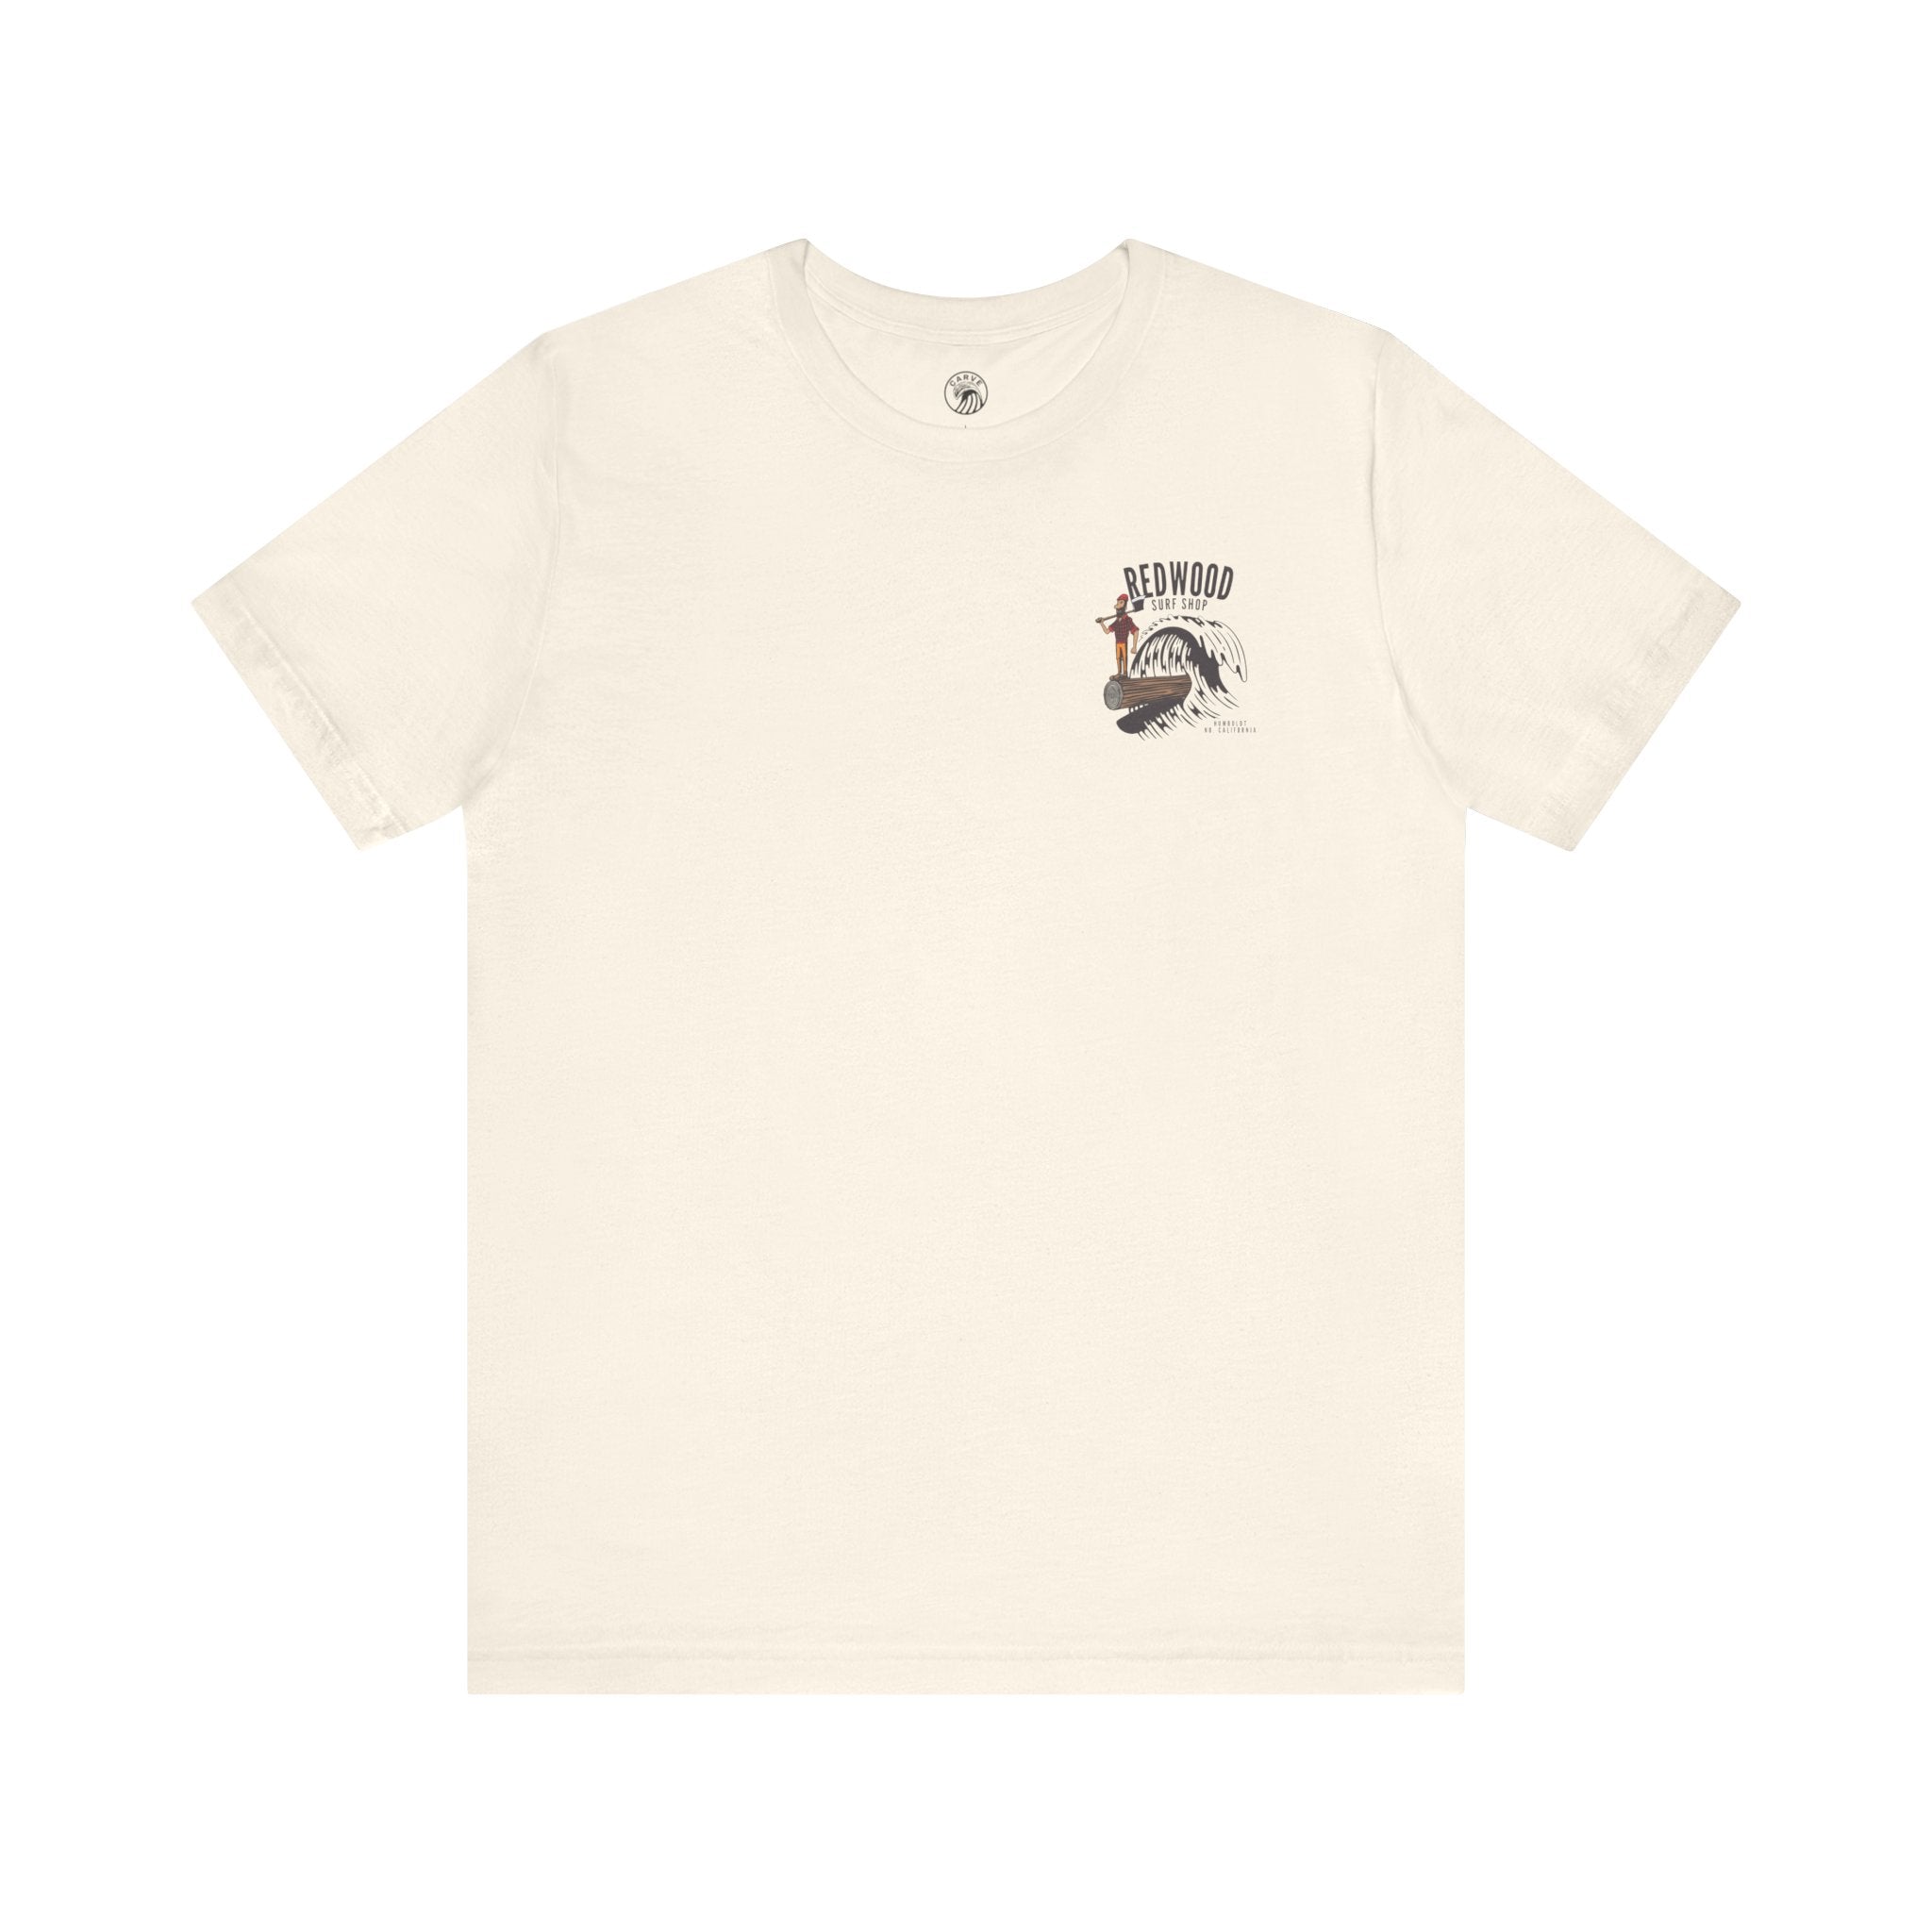 T-shirt: Redwood Surf Shop